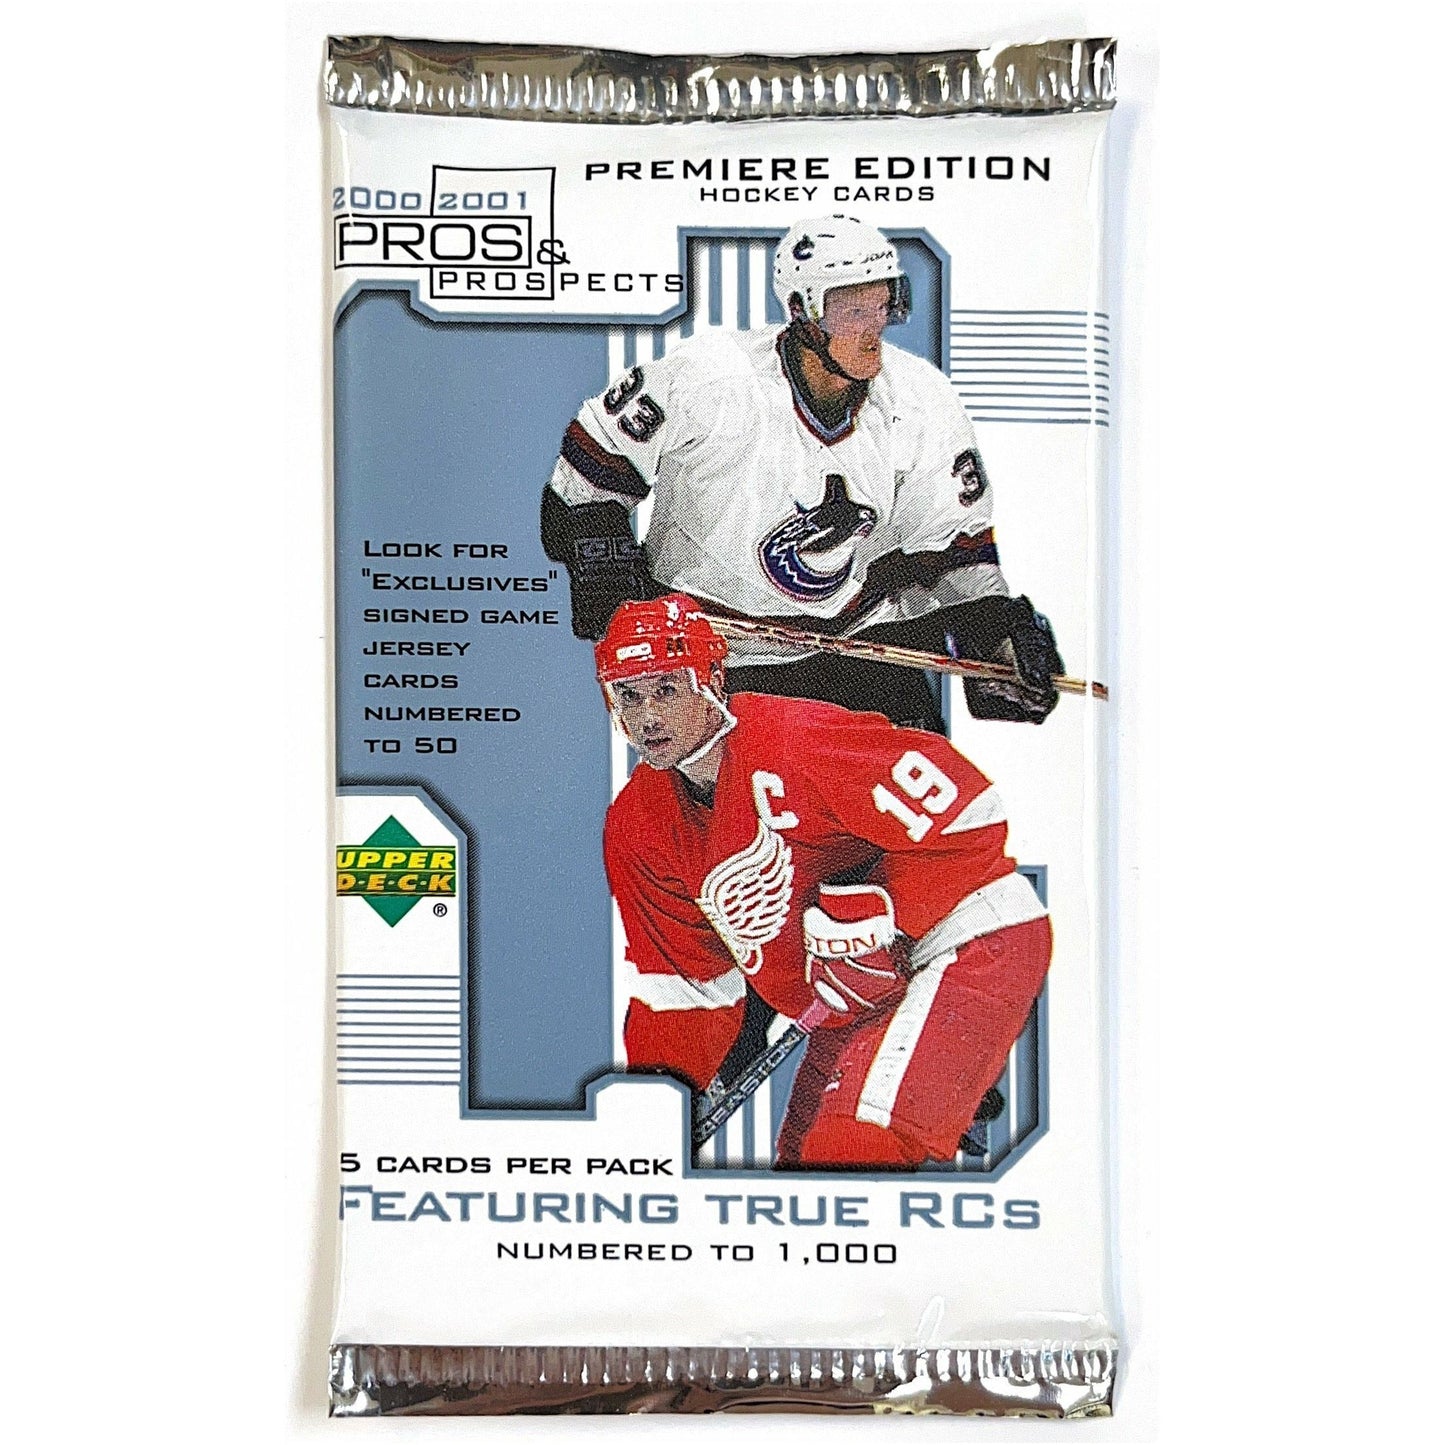 2000-01 Upper Deck Pros & Prospects NHL Hockey Hobby Pack